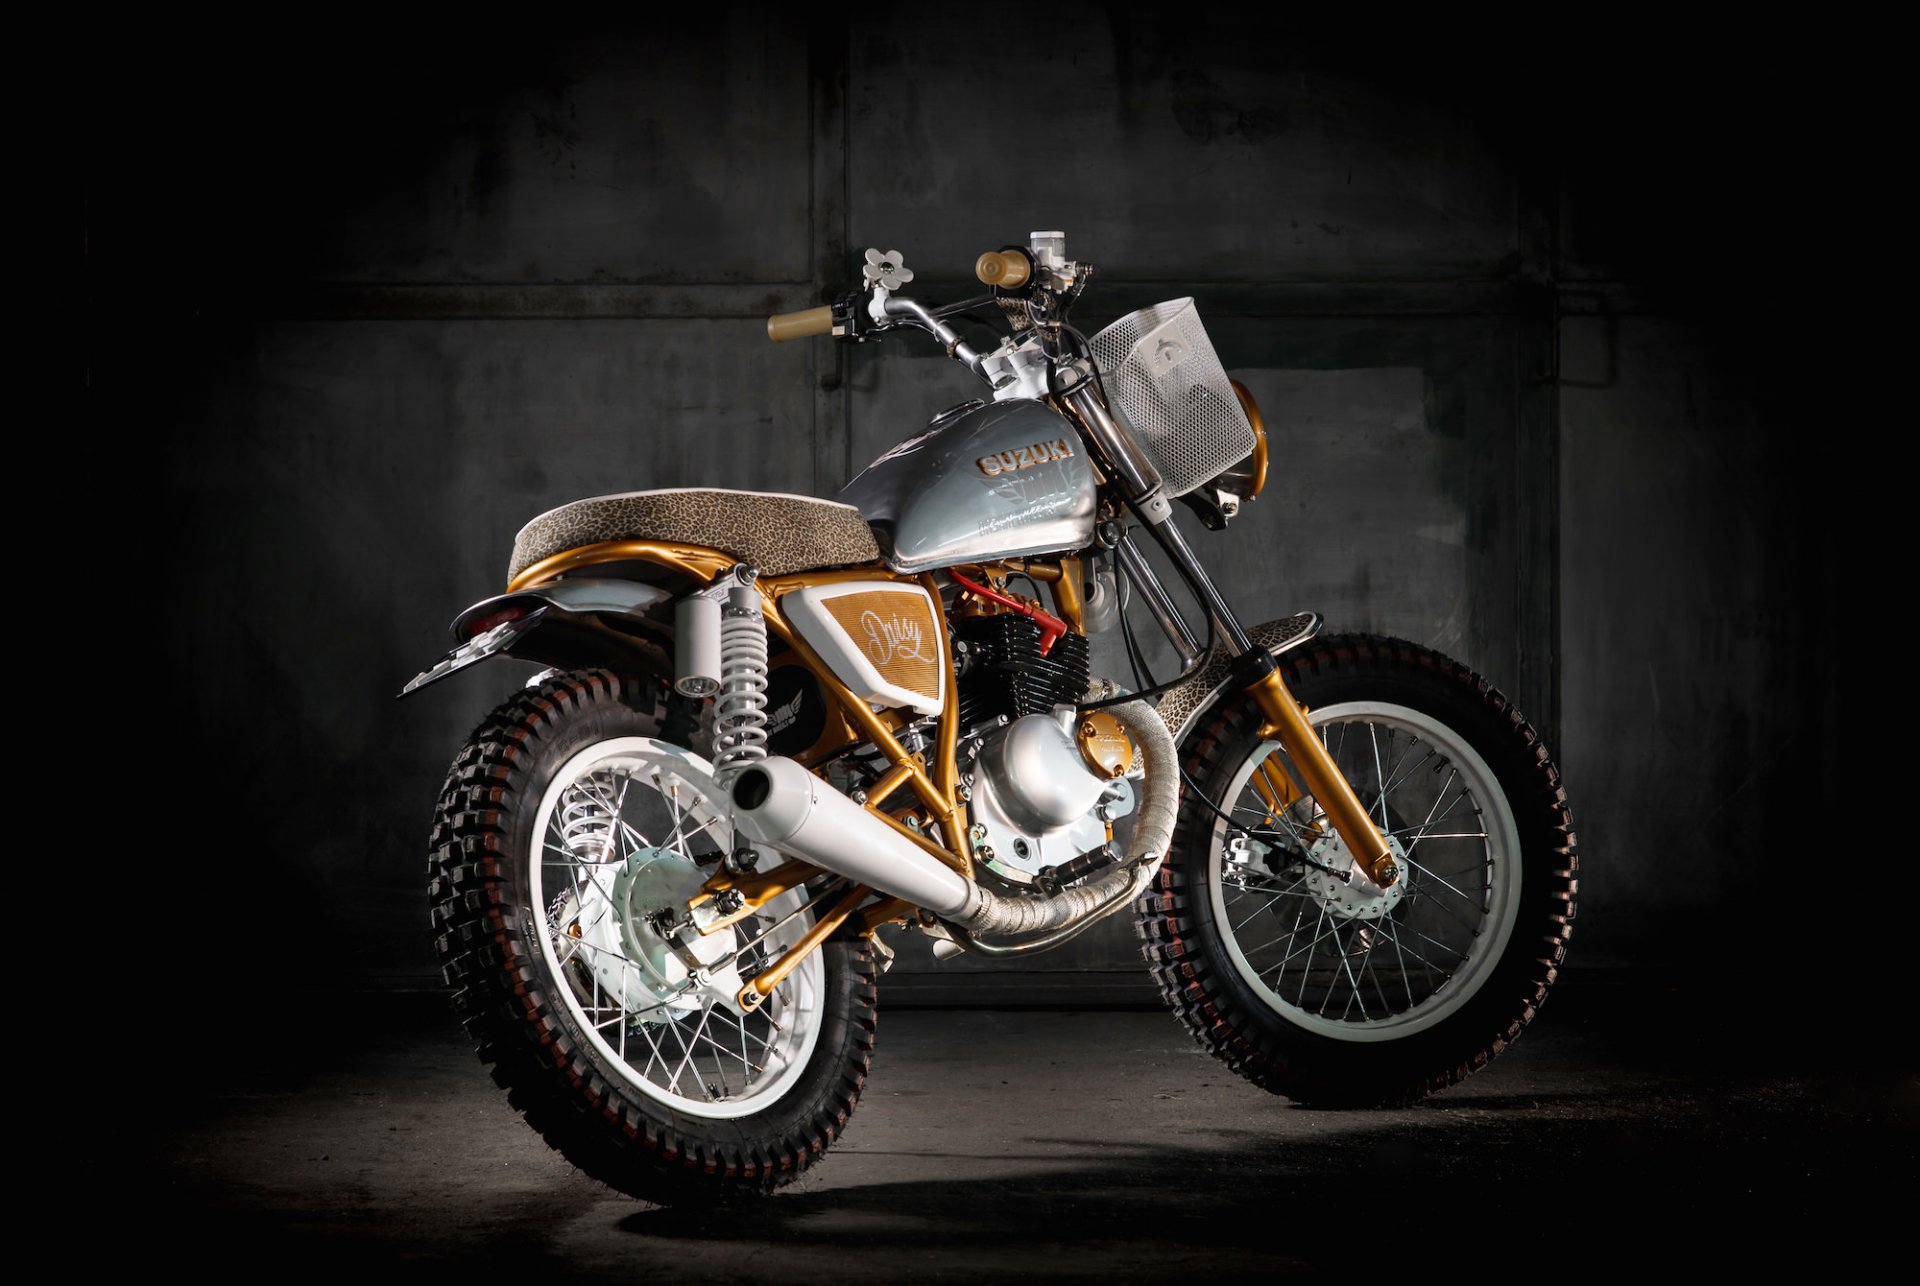 Moto Gallery Art on Instagram: “Suzuki GN 125 Scrambler by Solo